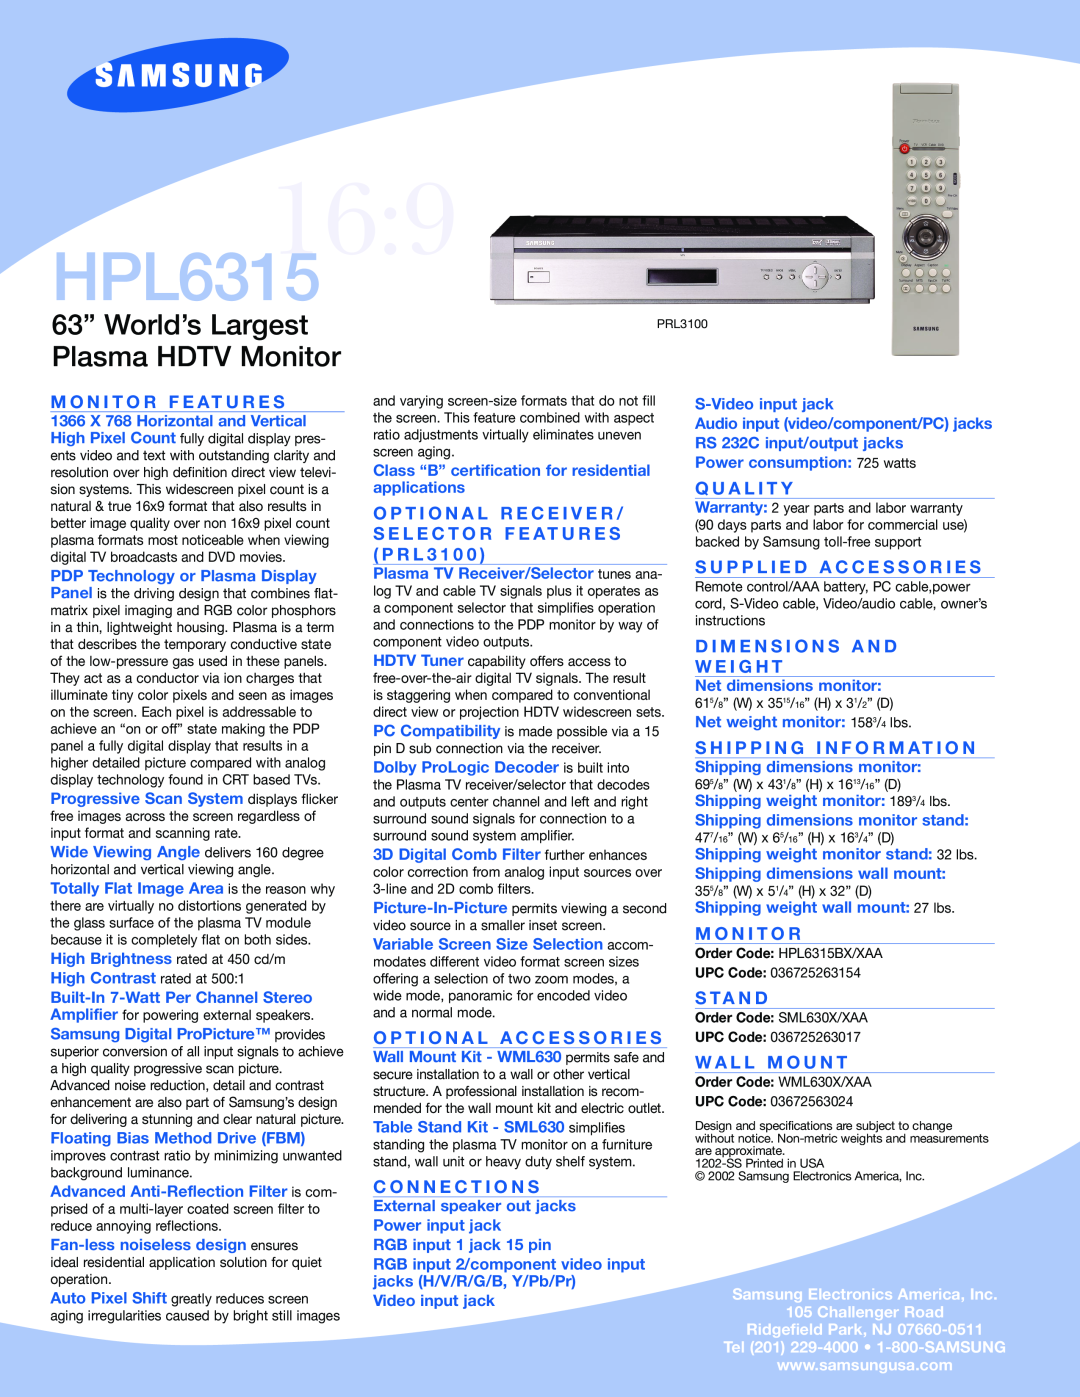 Samsung 9HPL6315 warranty 63” World’s Largest, Plasma HDTV Monitor 